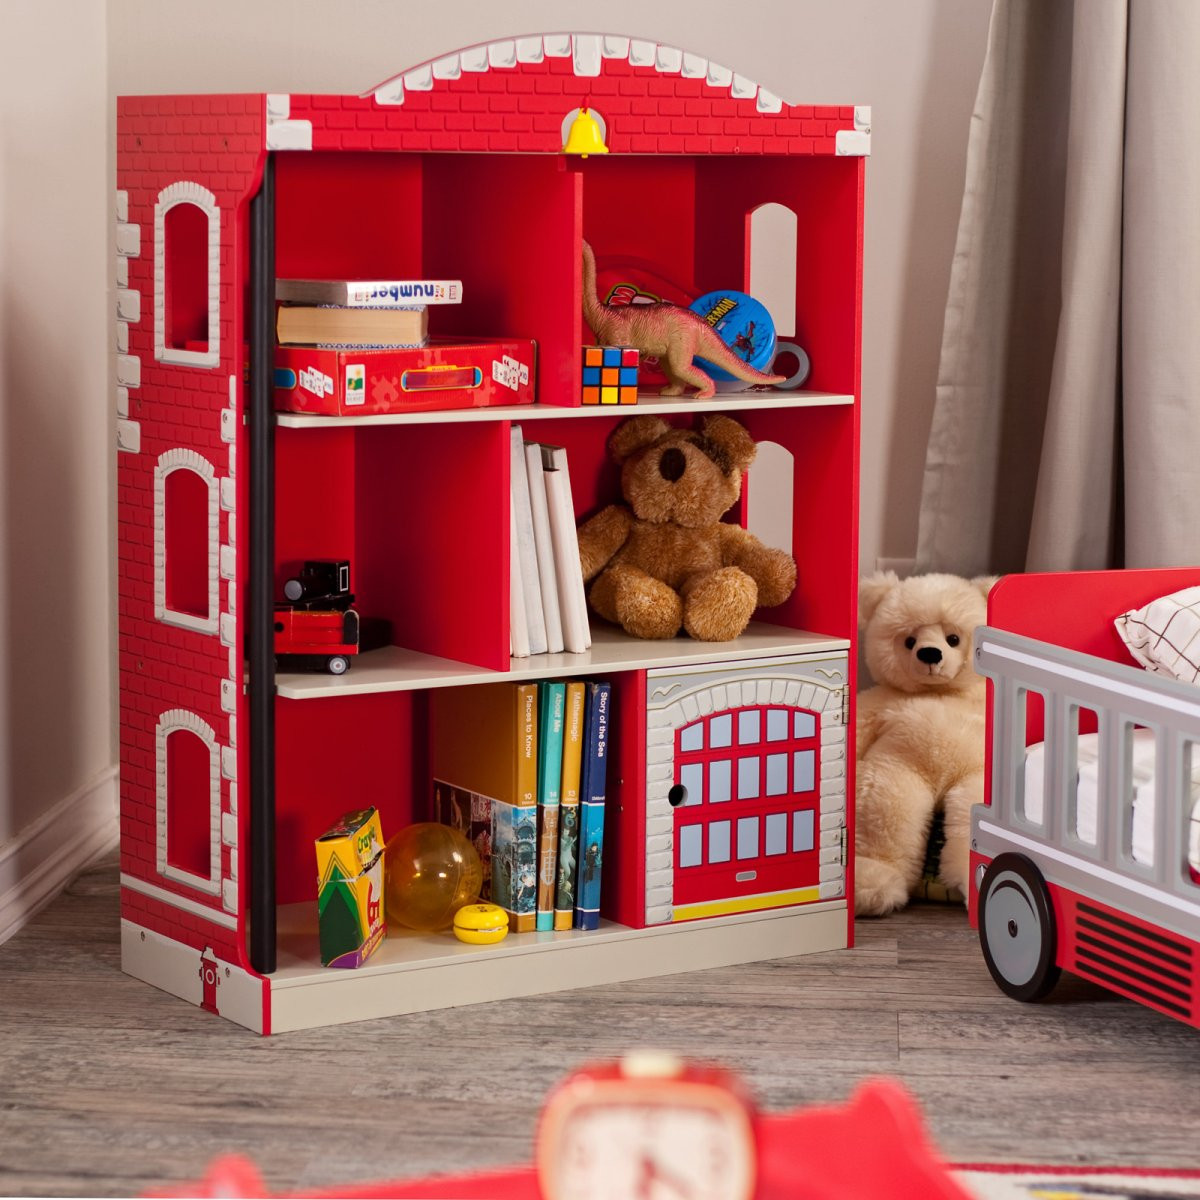 DIY Toddler Bookshelf
 Adorable Dollhouse Bookshelves for Kids to Decorate the